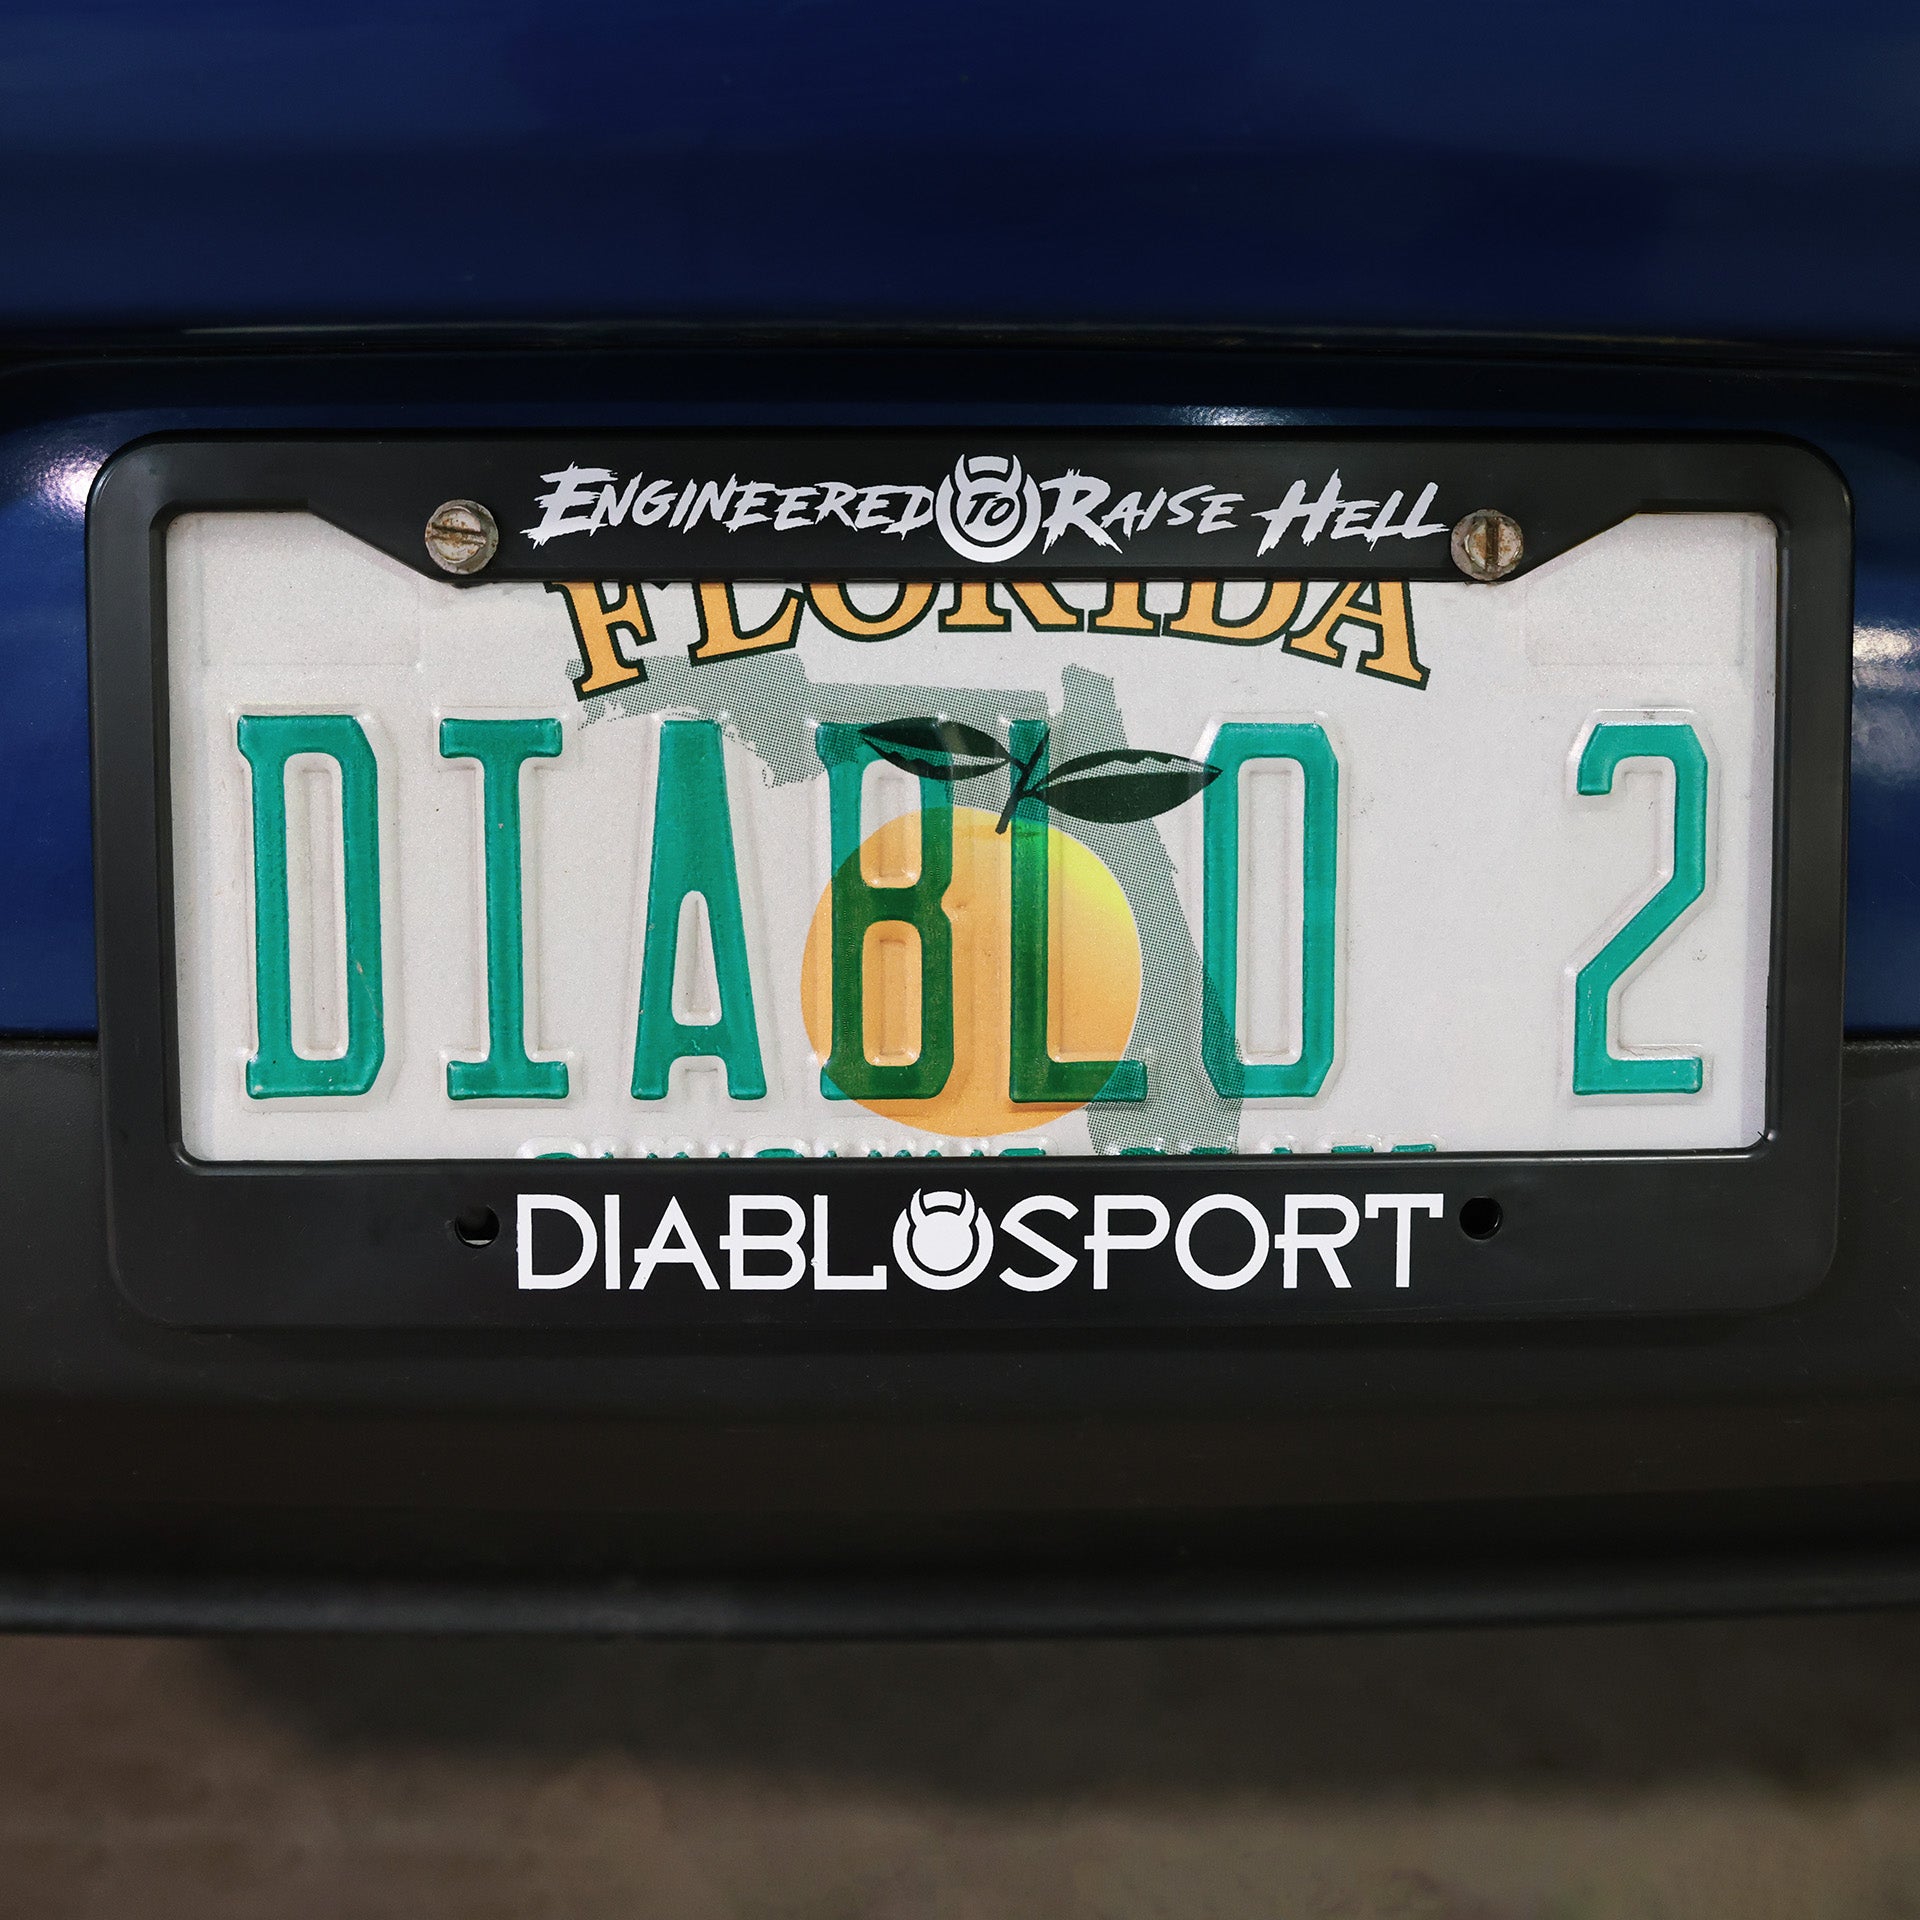 DiabloSport License Plate Frame DBL-LPF1